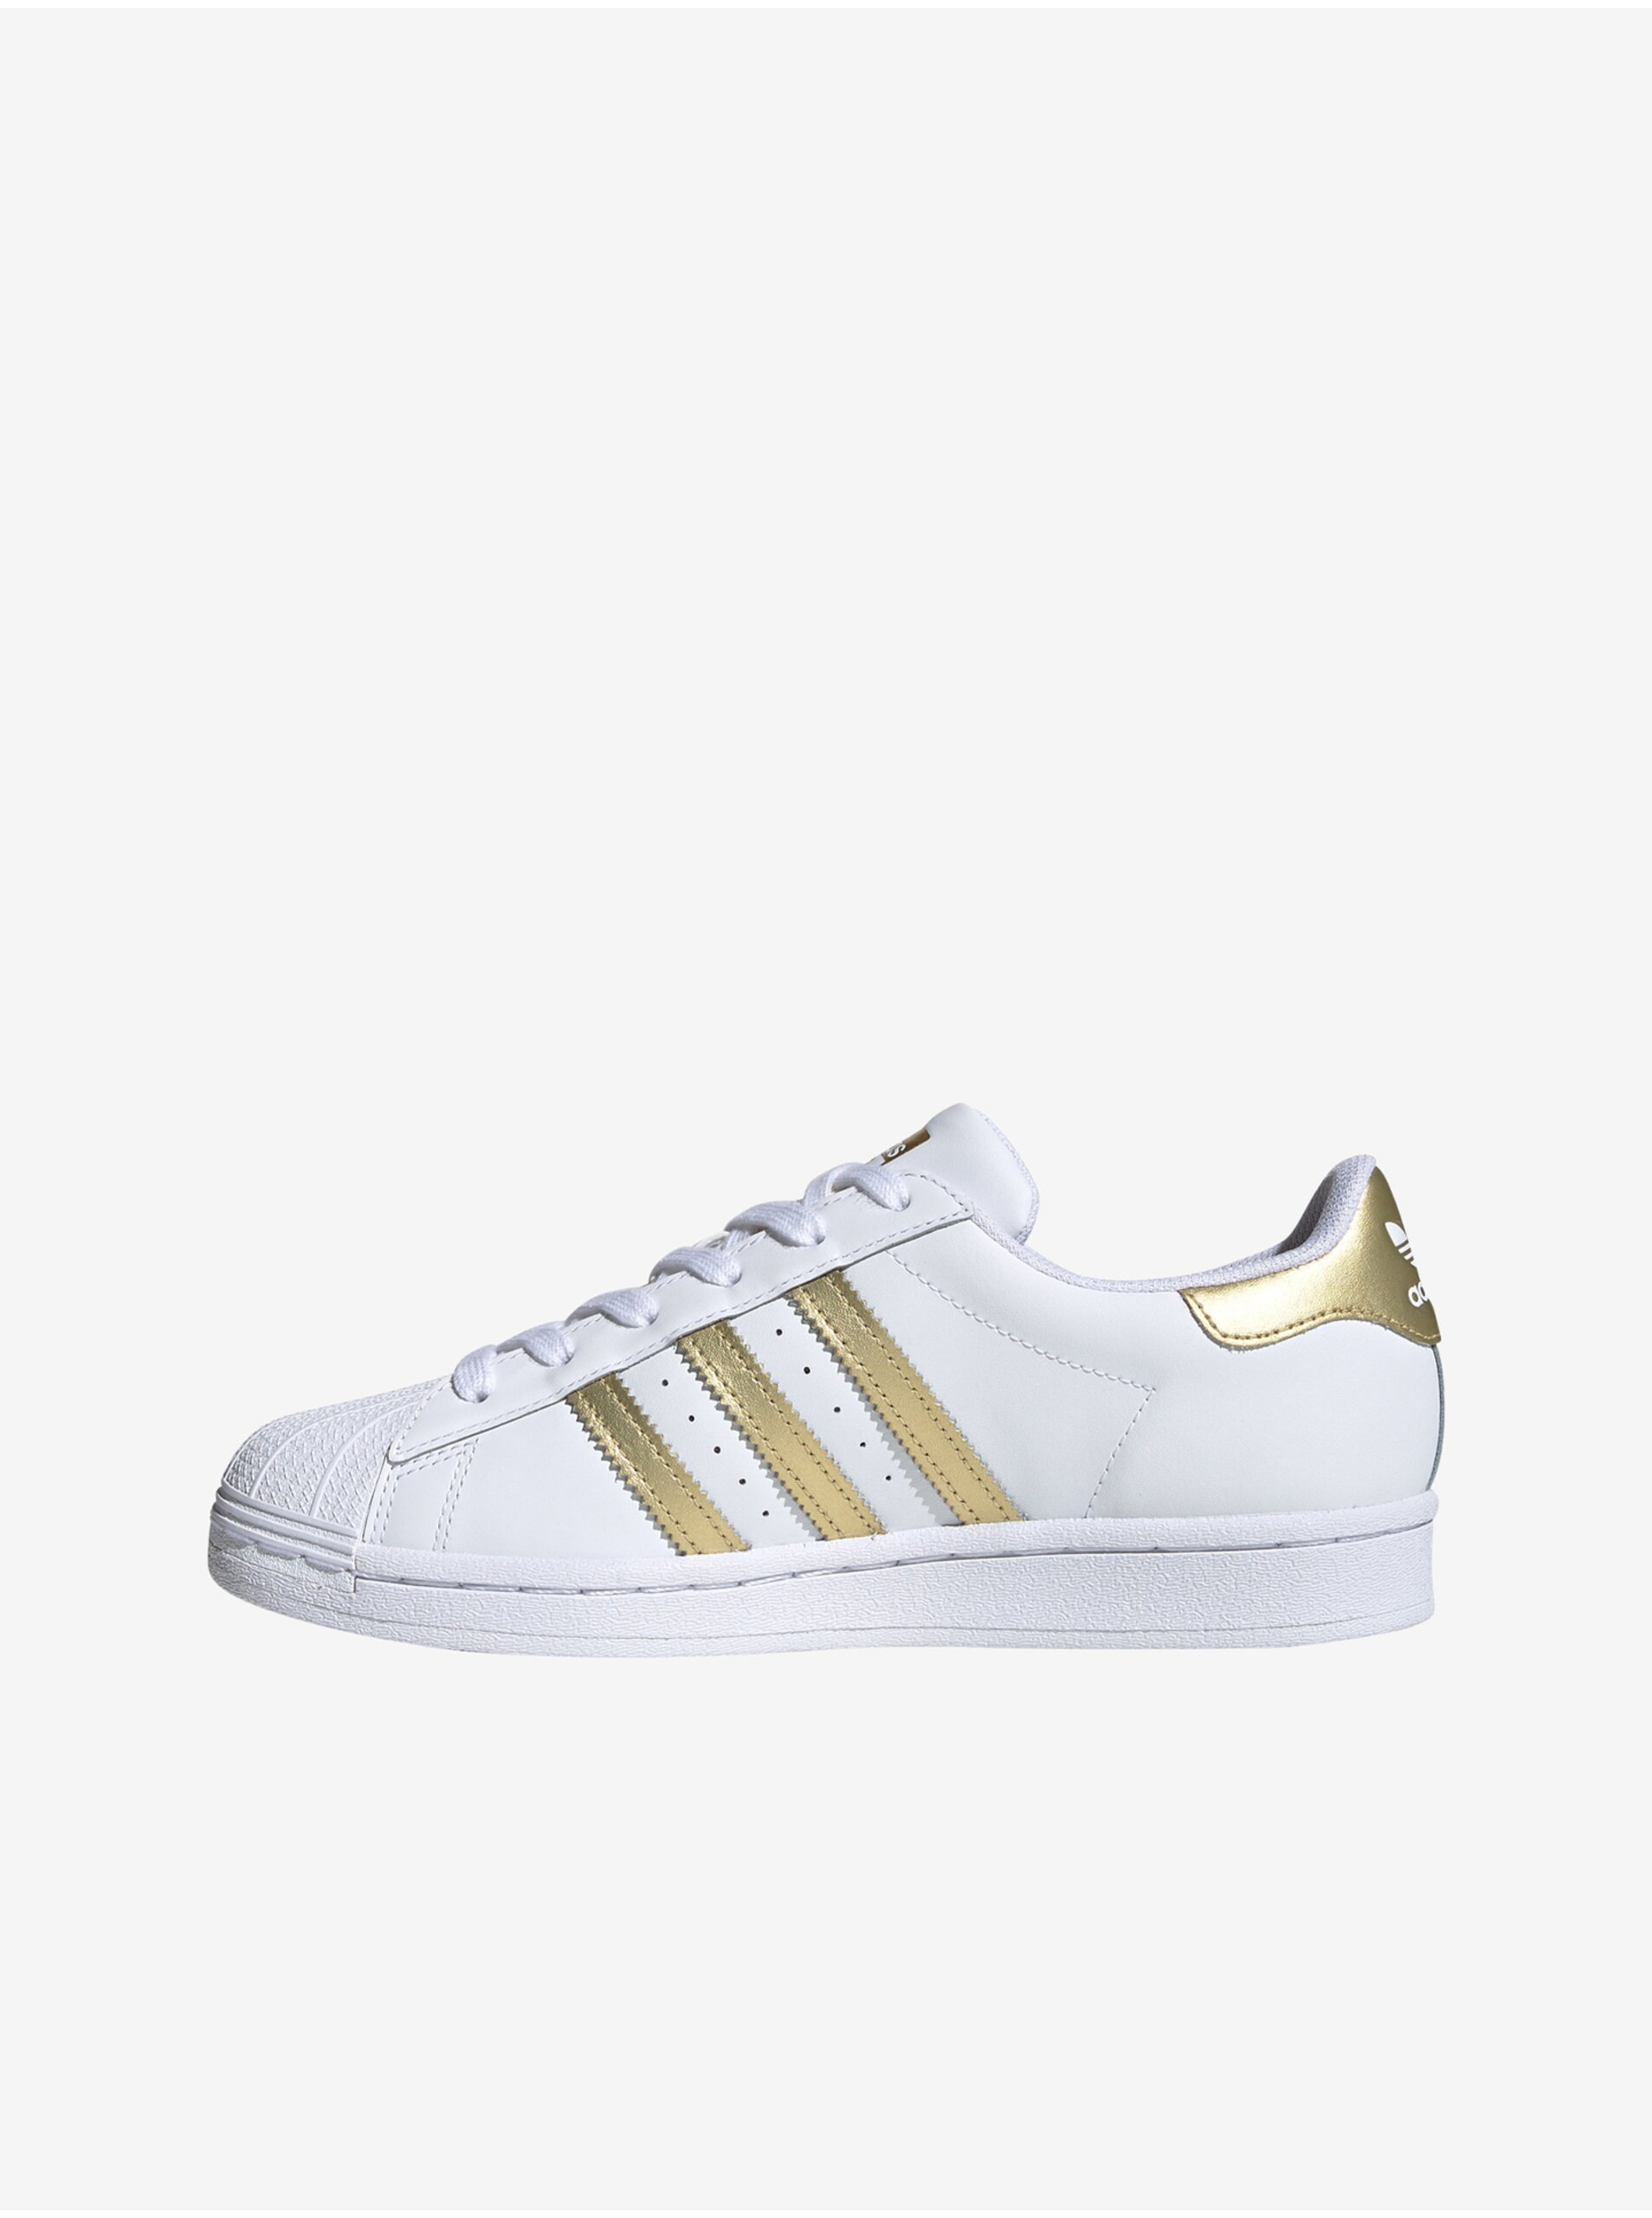 E-shop Zlato-bílé dámské kožené tenisky adidas Originals Superstar